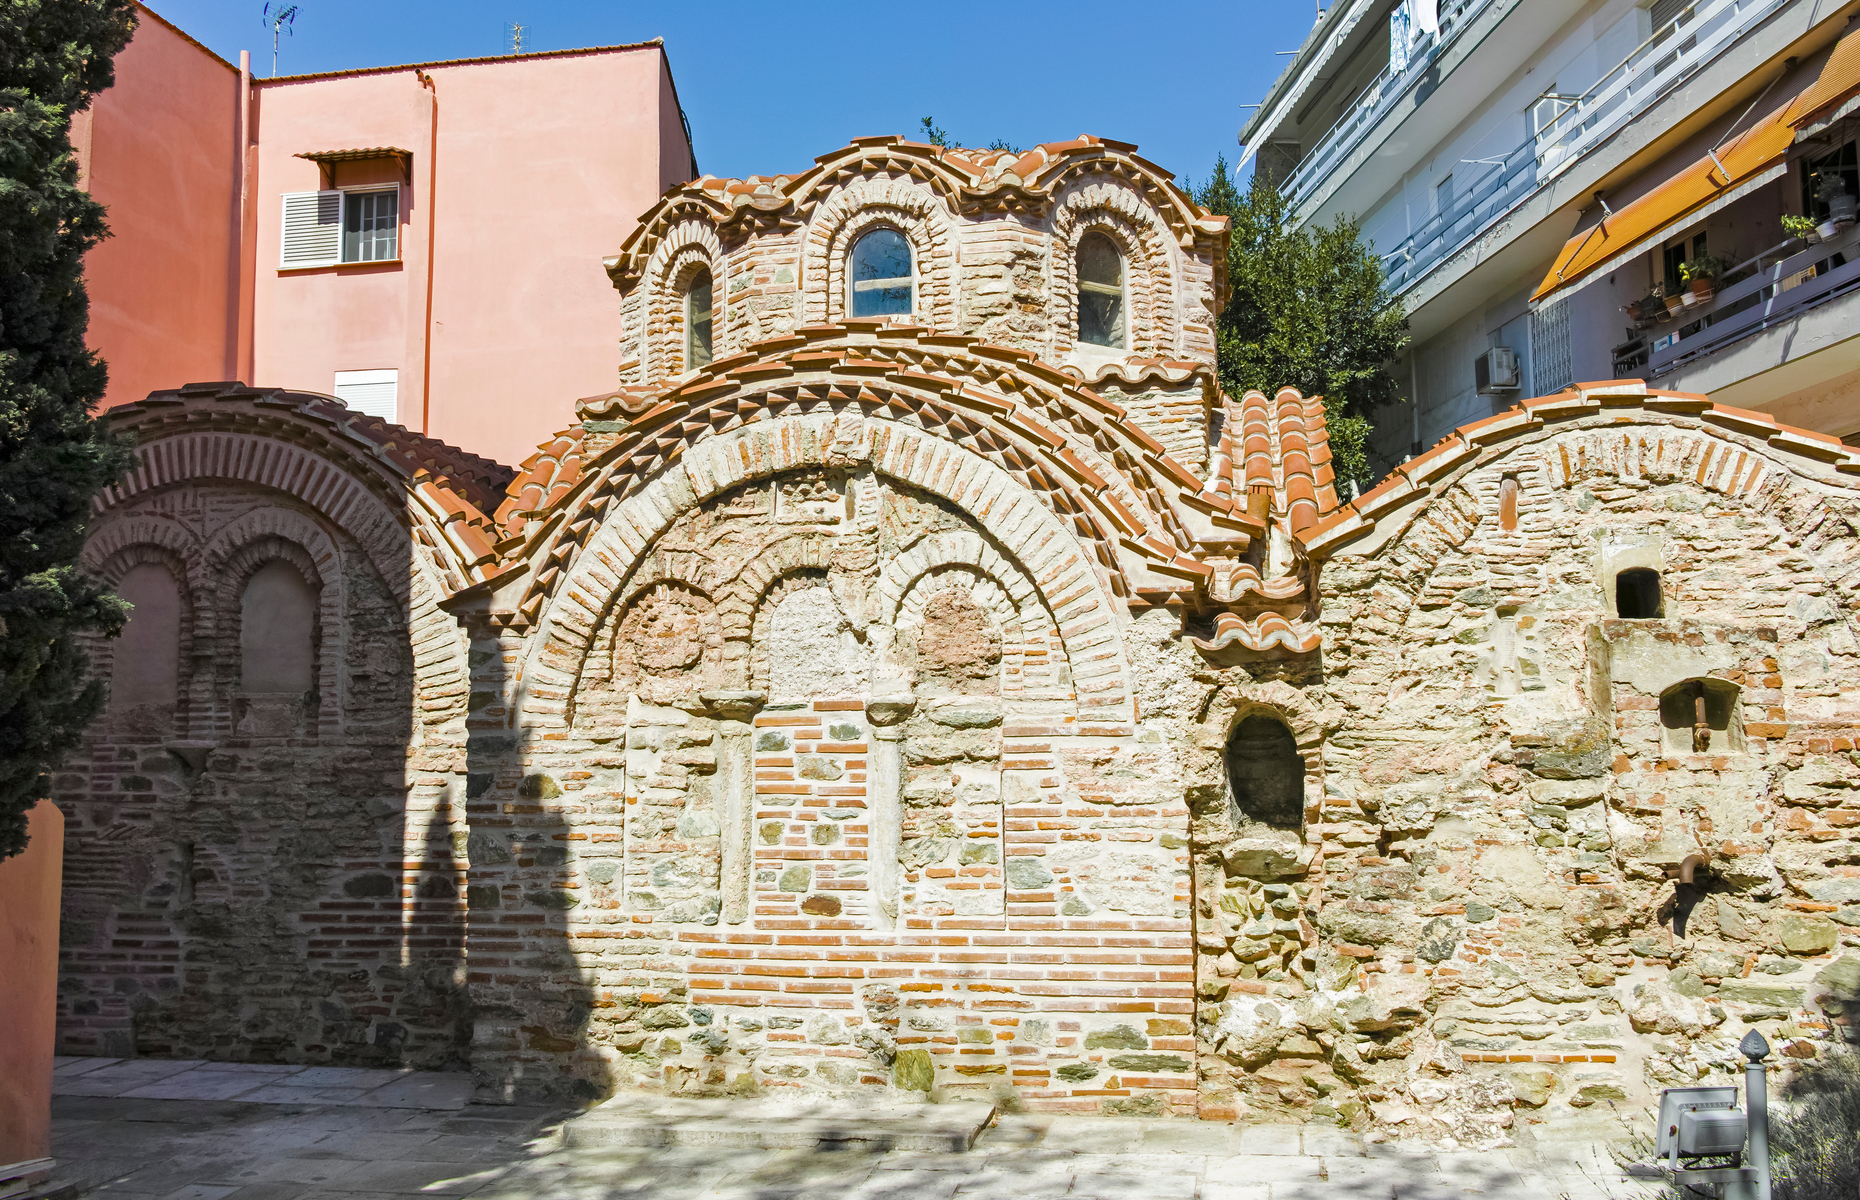 Upper Town in Thessaloniki (Image: Hdesislava/Shutterstock)